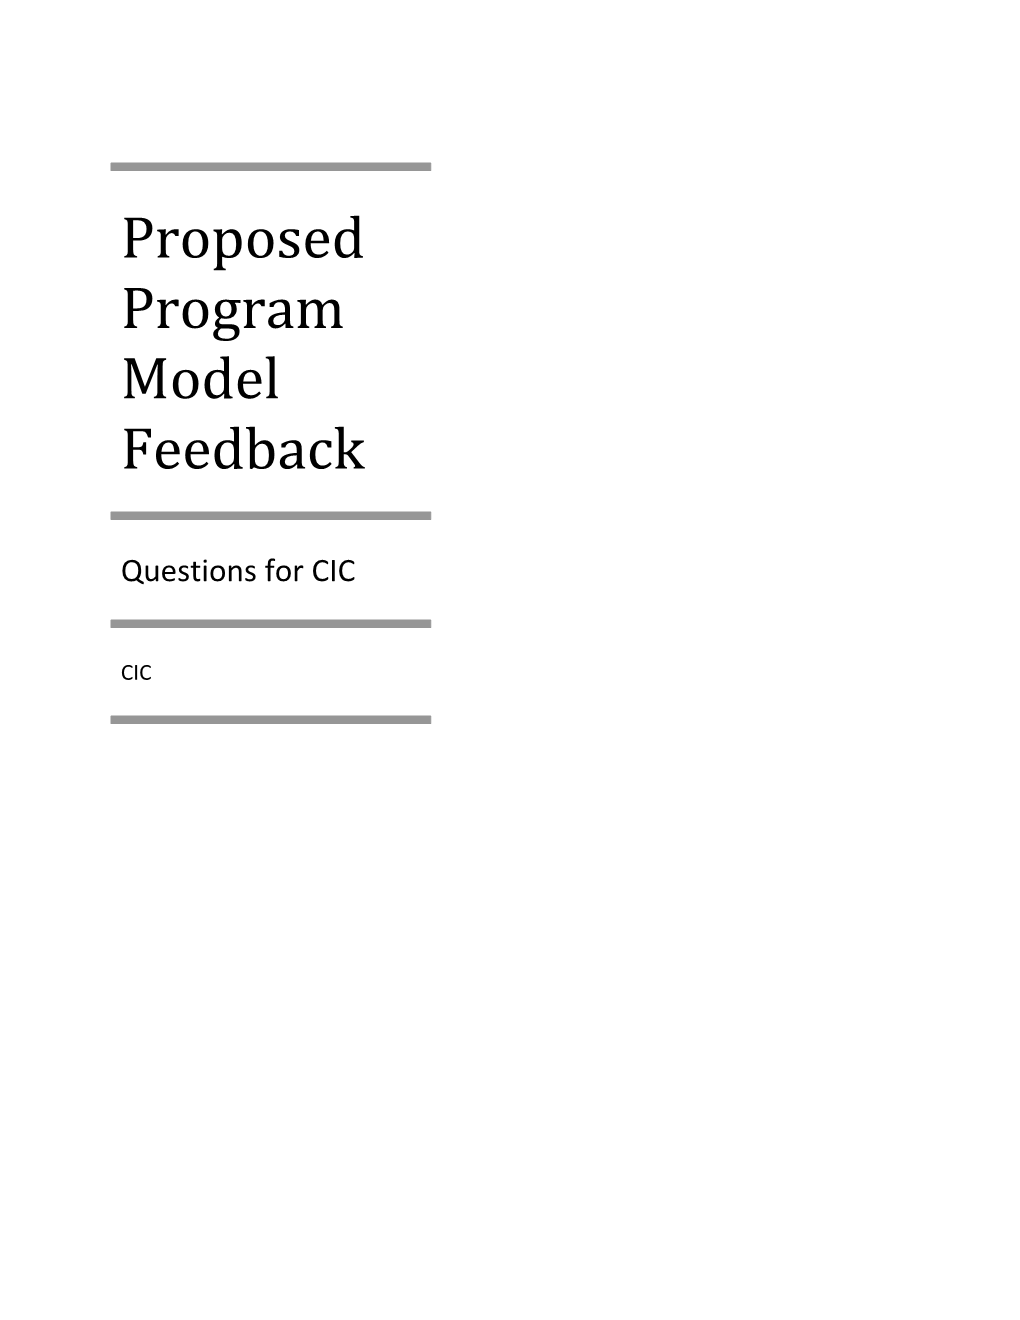 Proposed Program Model Feedback